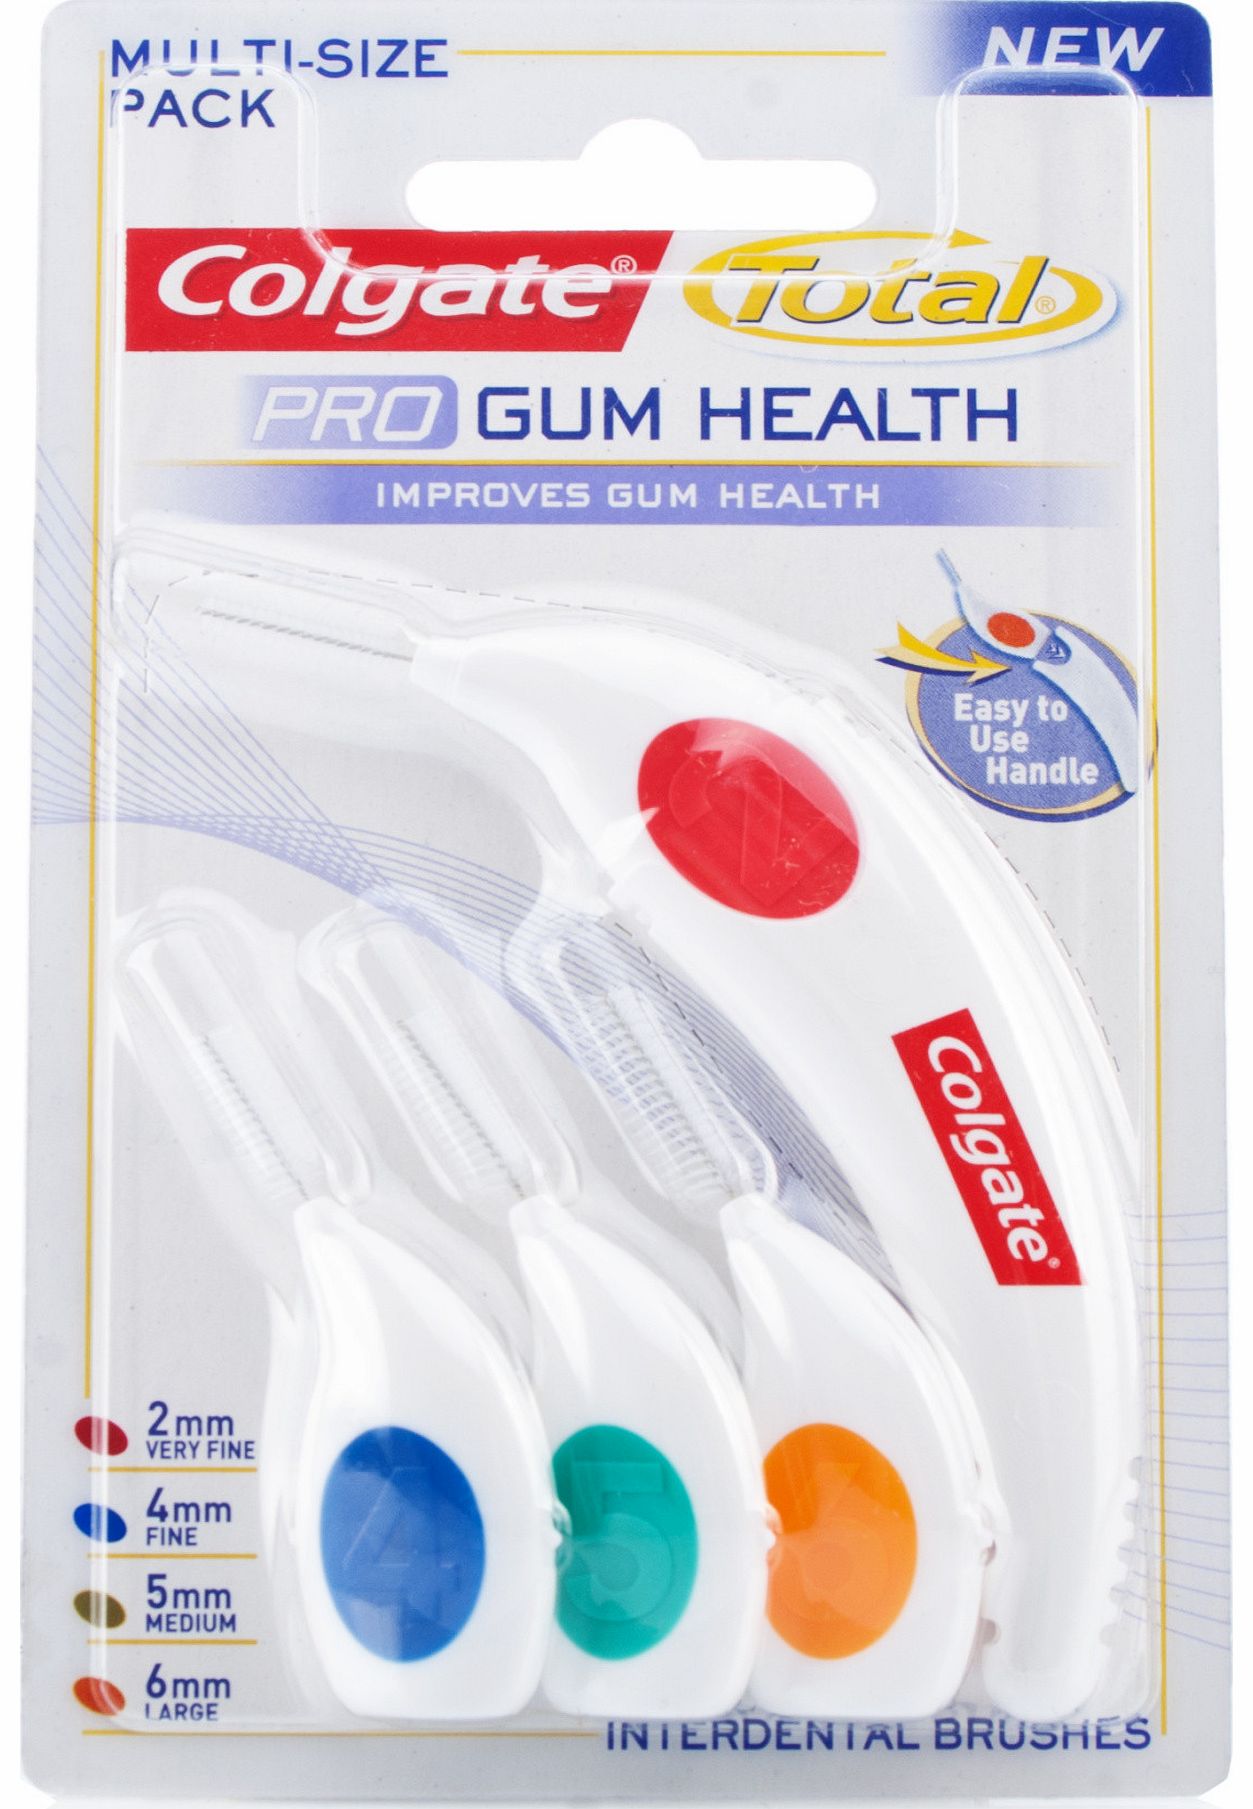 Colgate Total Pro Gum Health Interdental Brushes